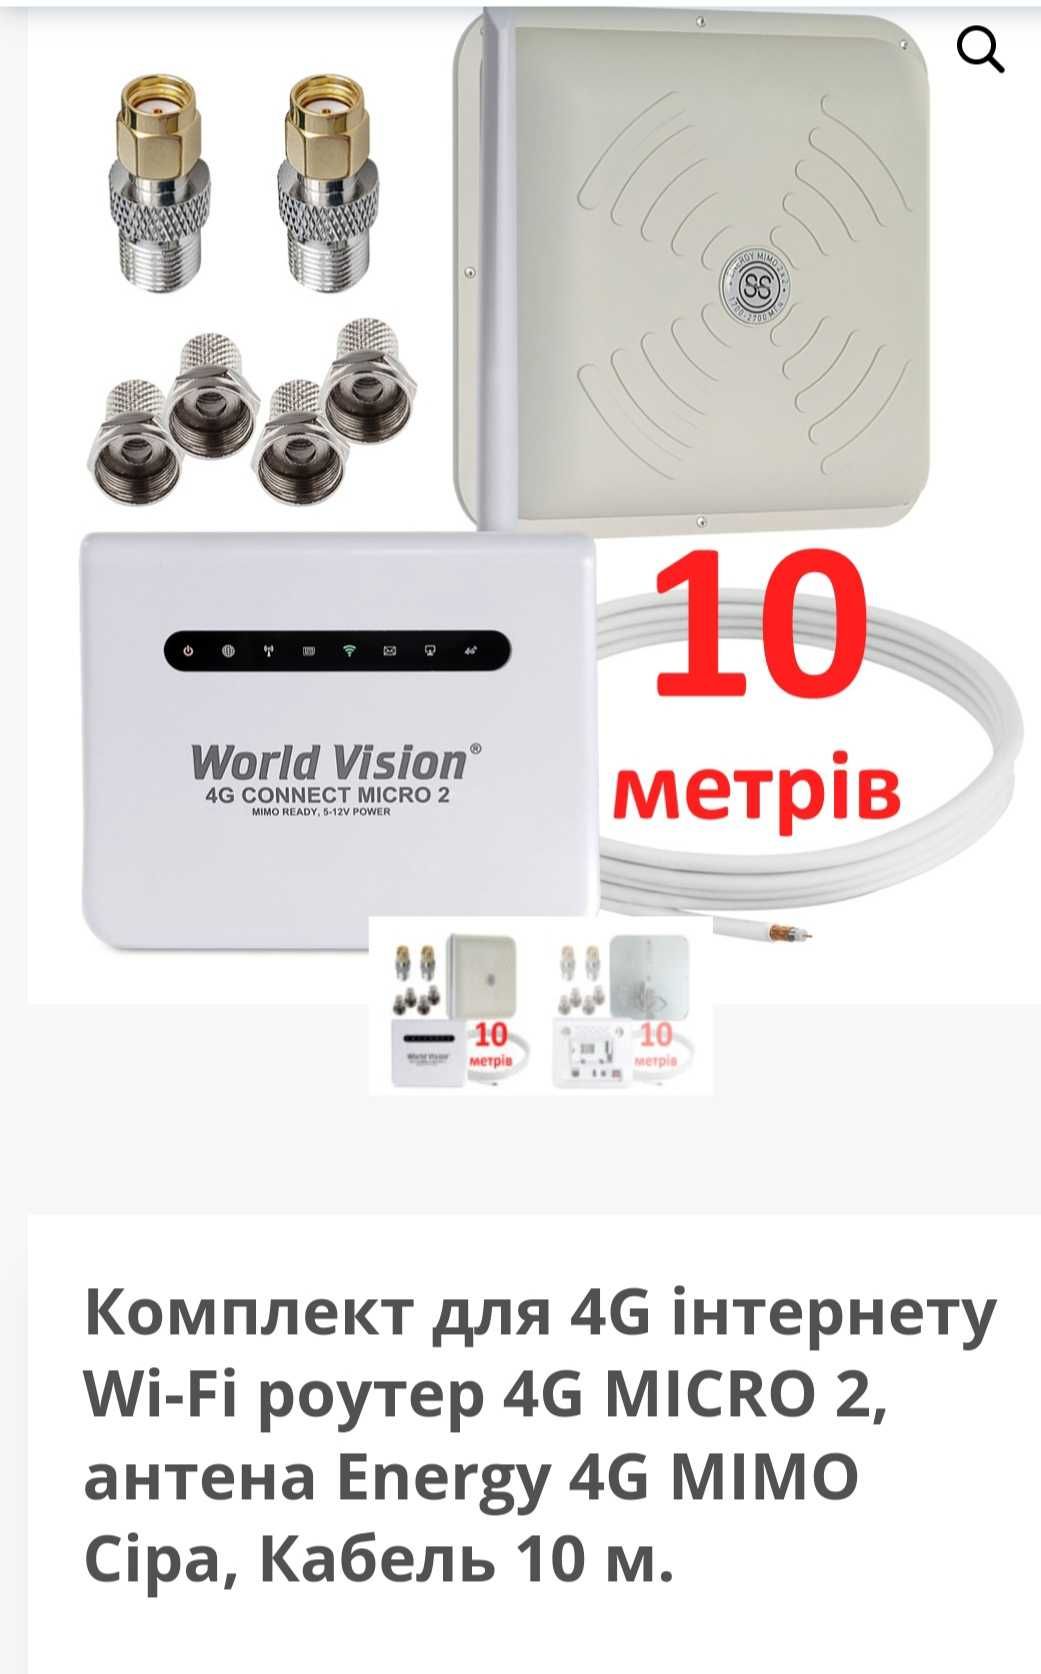 4G Wi-Fi роутер MIMO World Vision 4G CONNECT MICRO 2